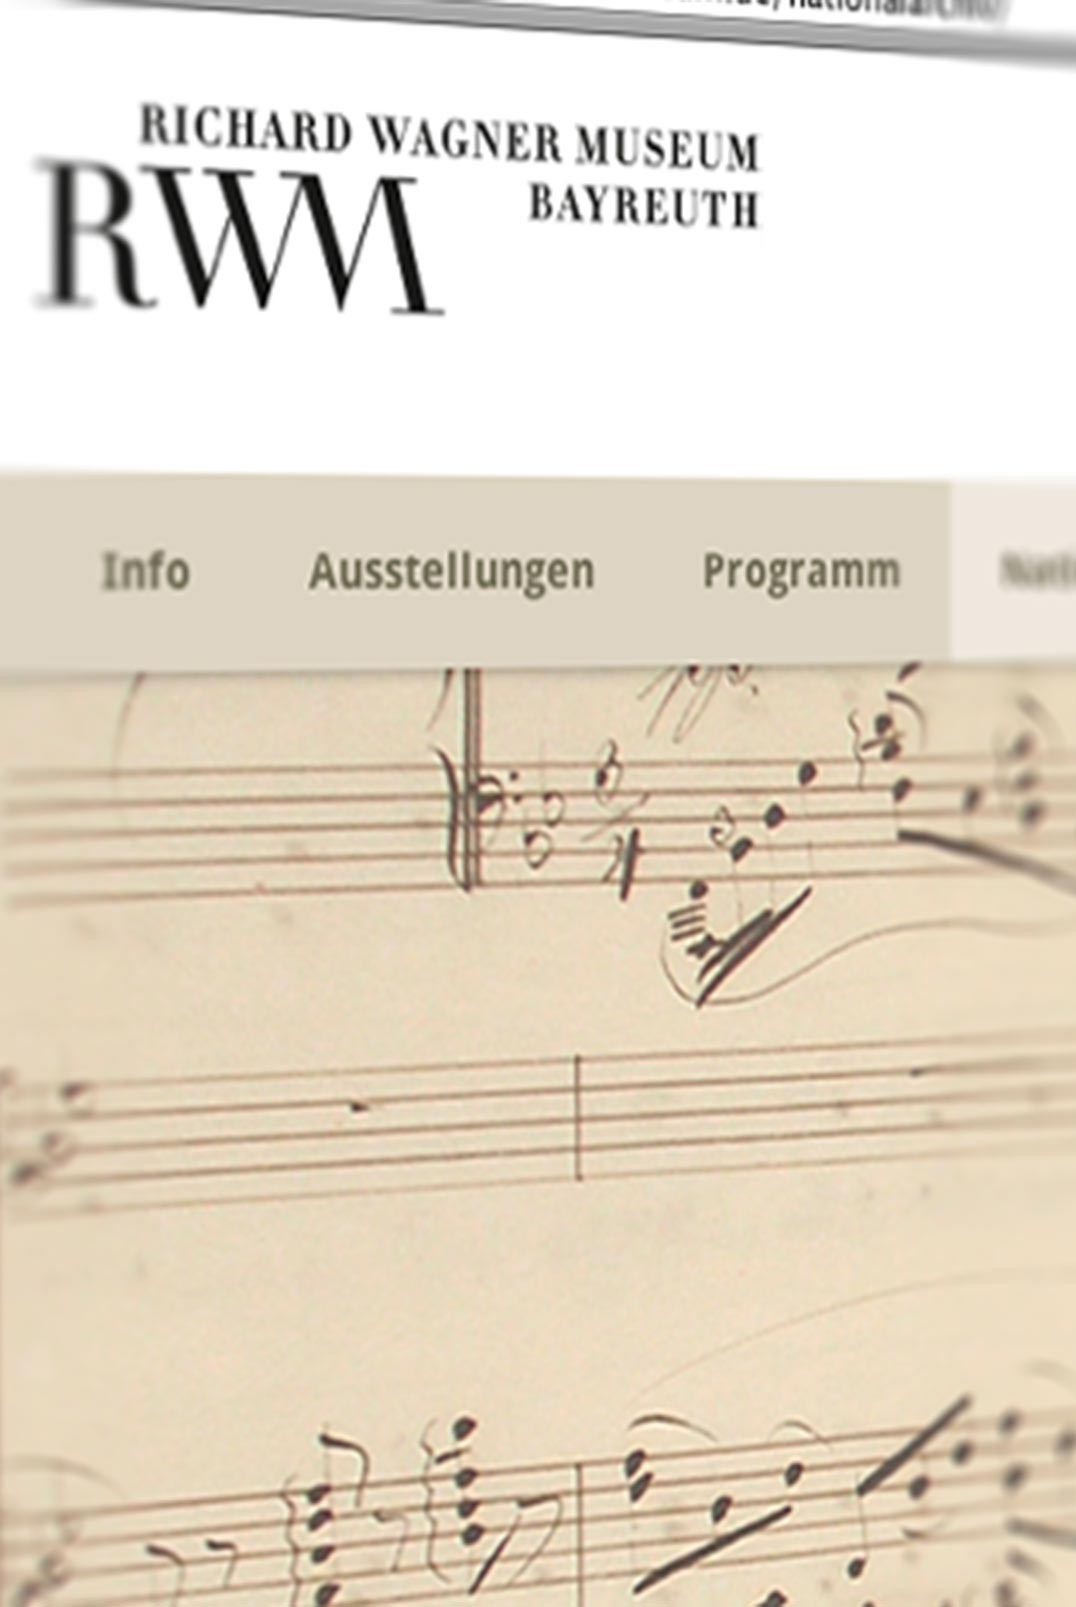 Website Richard Wagner Museum